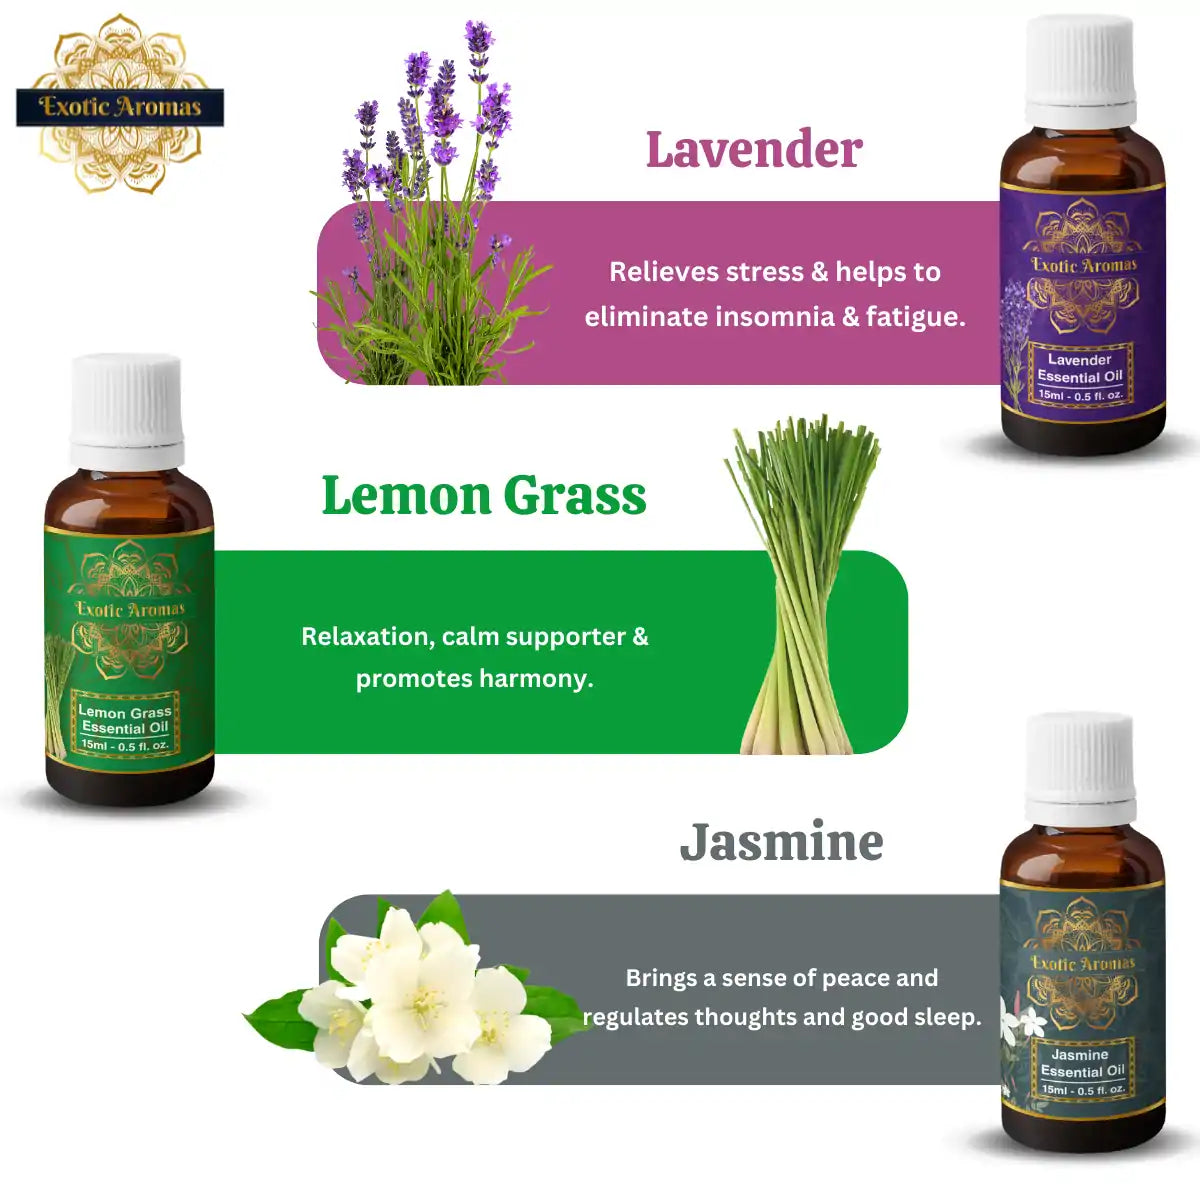 Essential Oil Pack of 5 - Lavender, Lemongrass, Jasmine, Orange, Rose Essential Oil, 10 ML Each